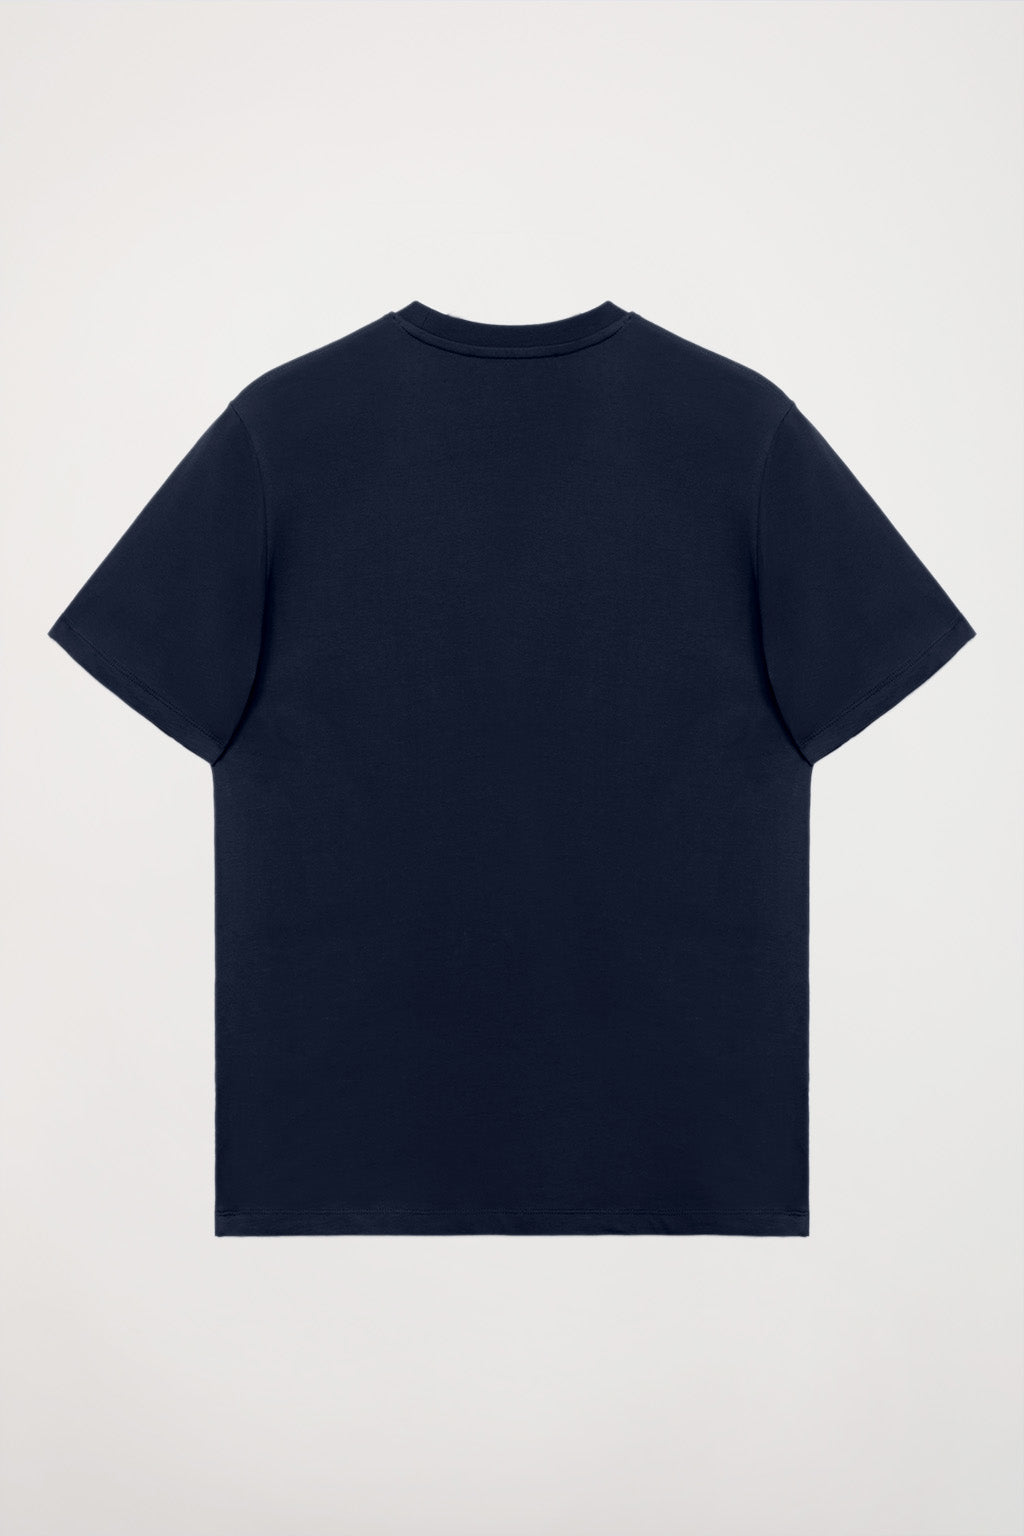 Pack de tres camisetas azul marino, blanca y gris vigoré de ma – Polo Club